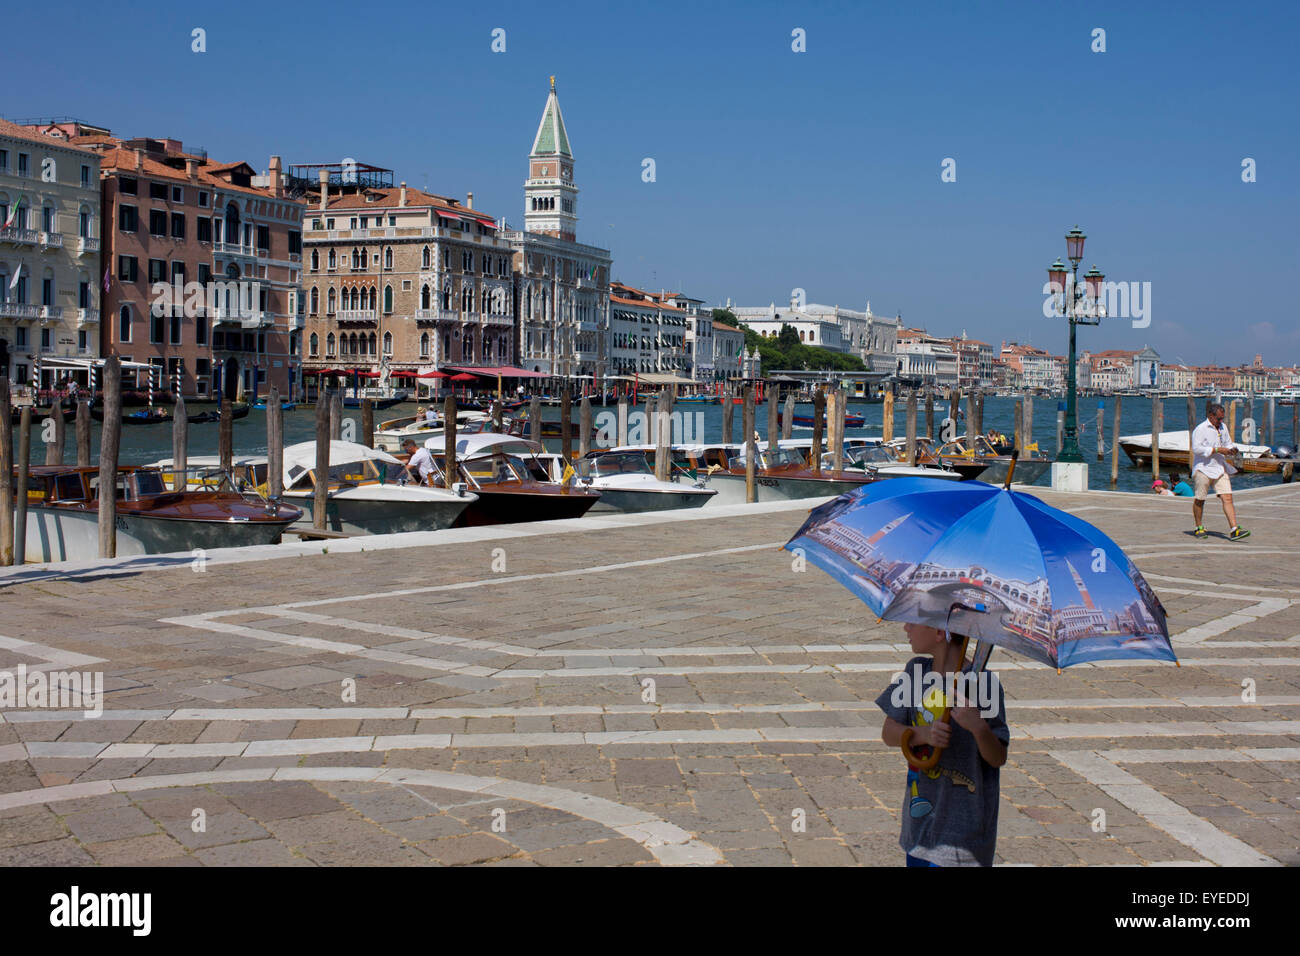 A boy carries a Venice picture umbrella in front of Santa Maria della Salute church in Dorsoduro, overlooking the Grand Canal Stock Photo